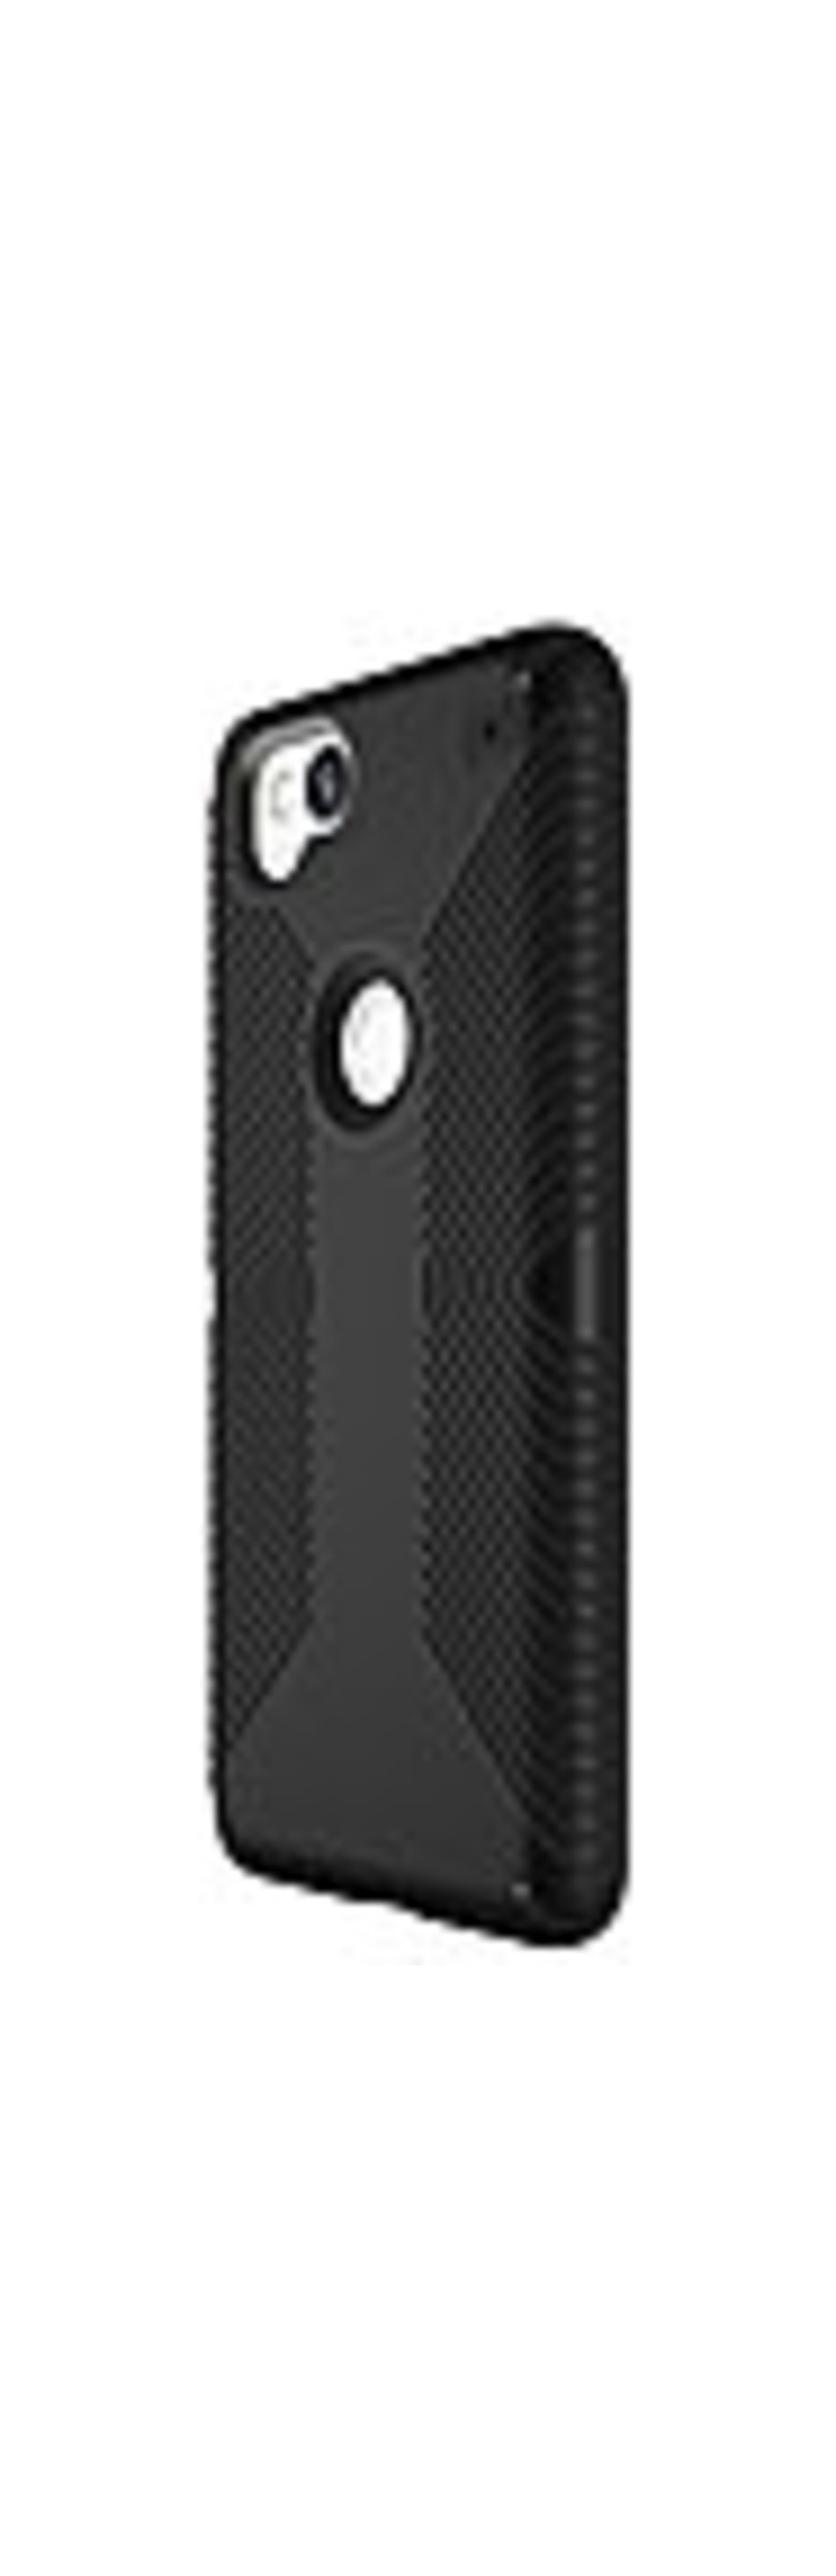 Speck Presidio Grip Smartphone Case - For Smartphone - Matte Textured - Black/Black - Matte - Scratch Resistant, Shock Absorbing, Shock Resistant, Dro